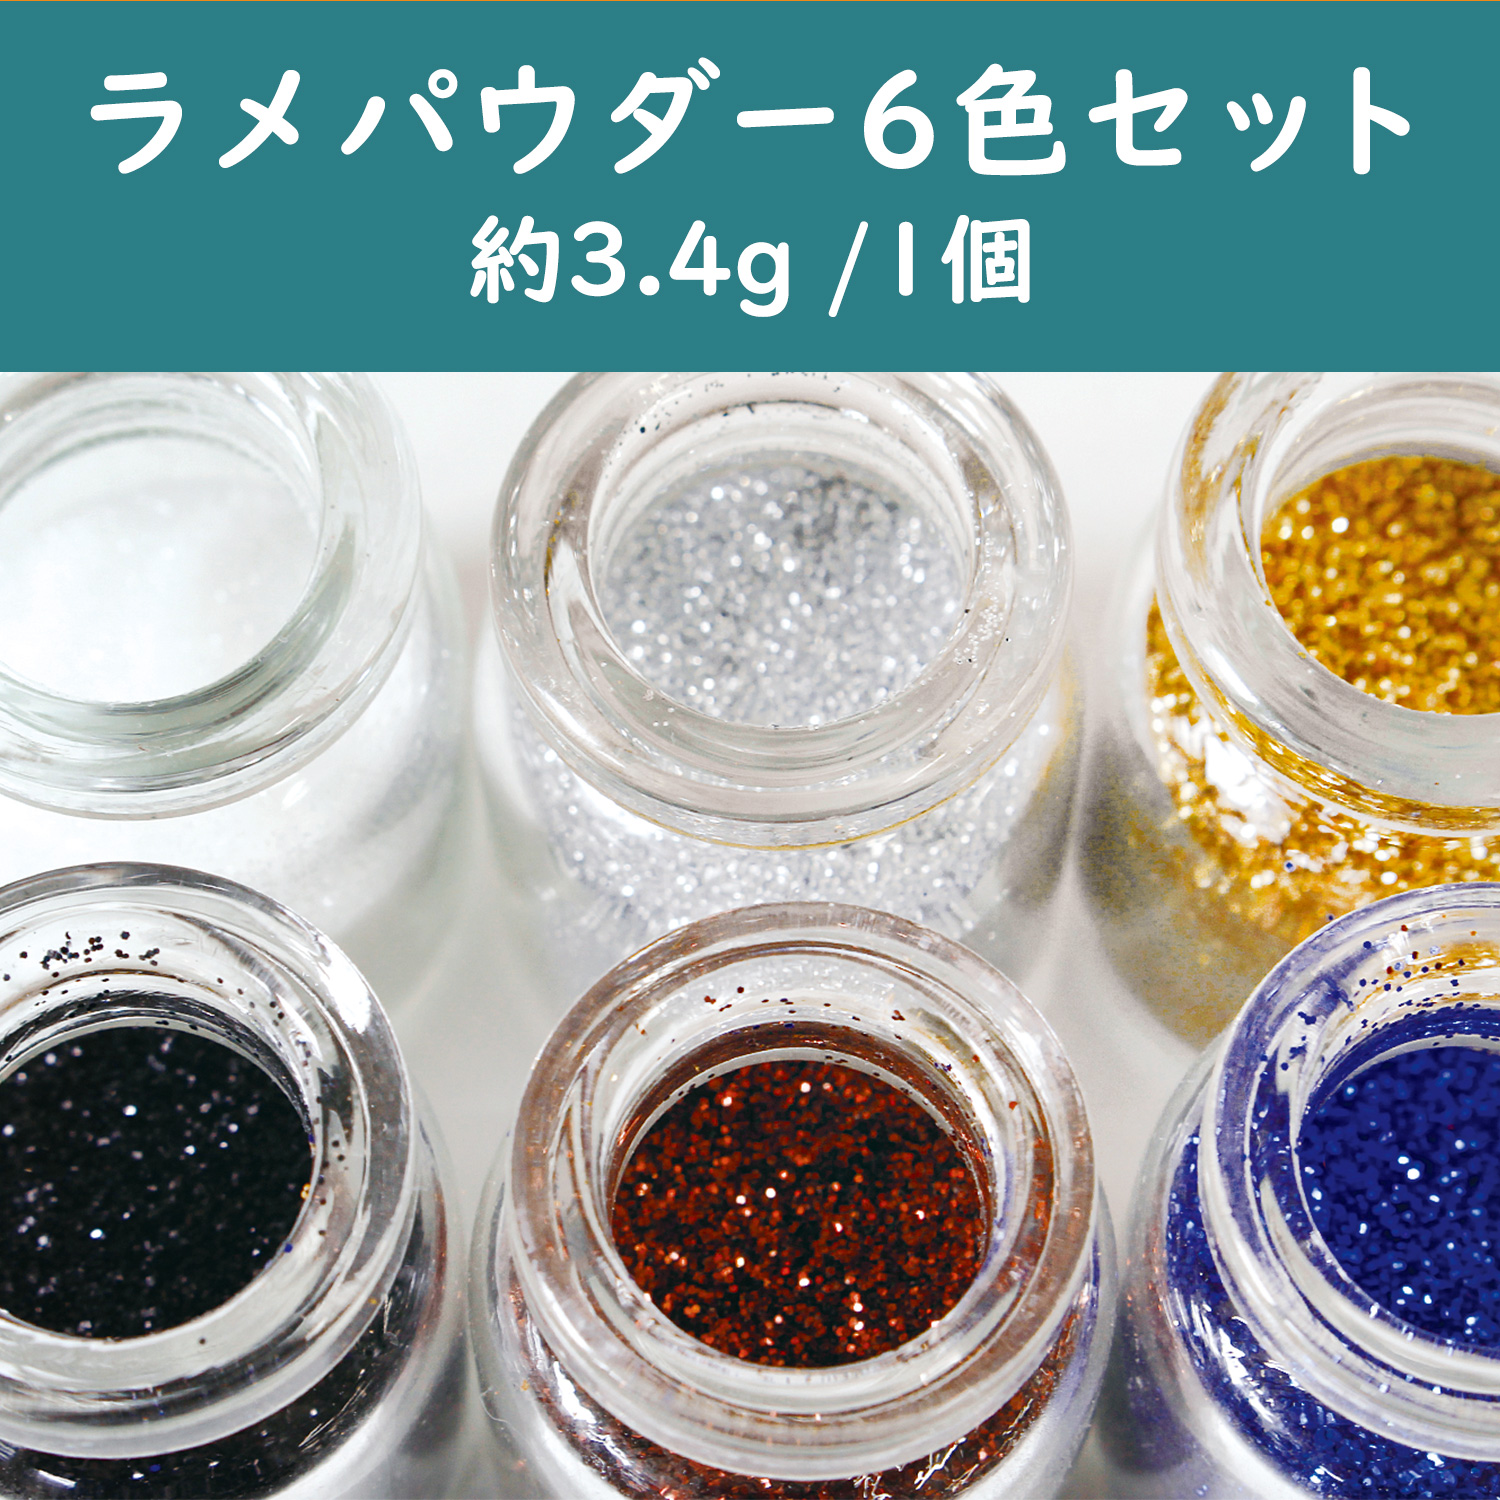 T10-M glitter powder 6 colors set approx. 3.4g/1 piece (set)